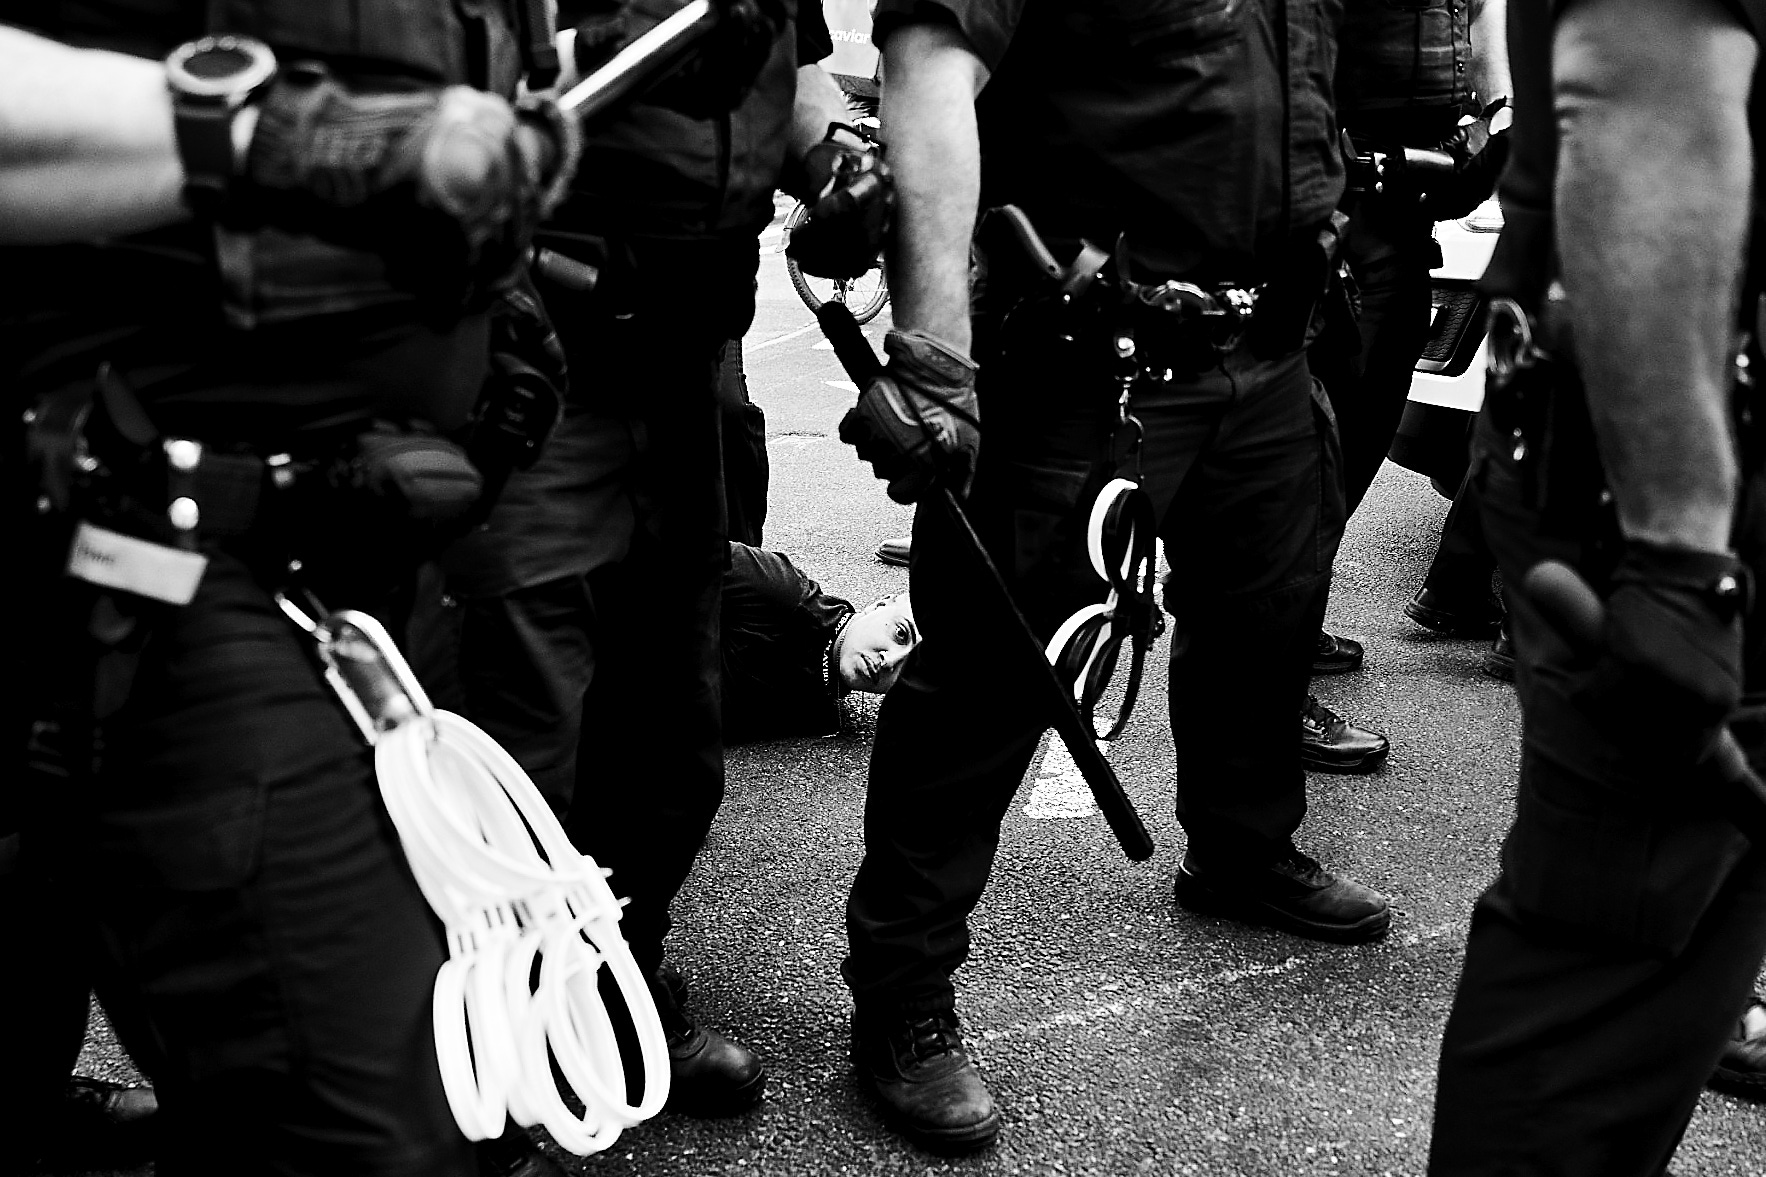 210518-1_NYC_Protests_FreePalestineIsraeliConsulateToUN_Arrests_UN_1068